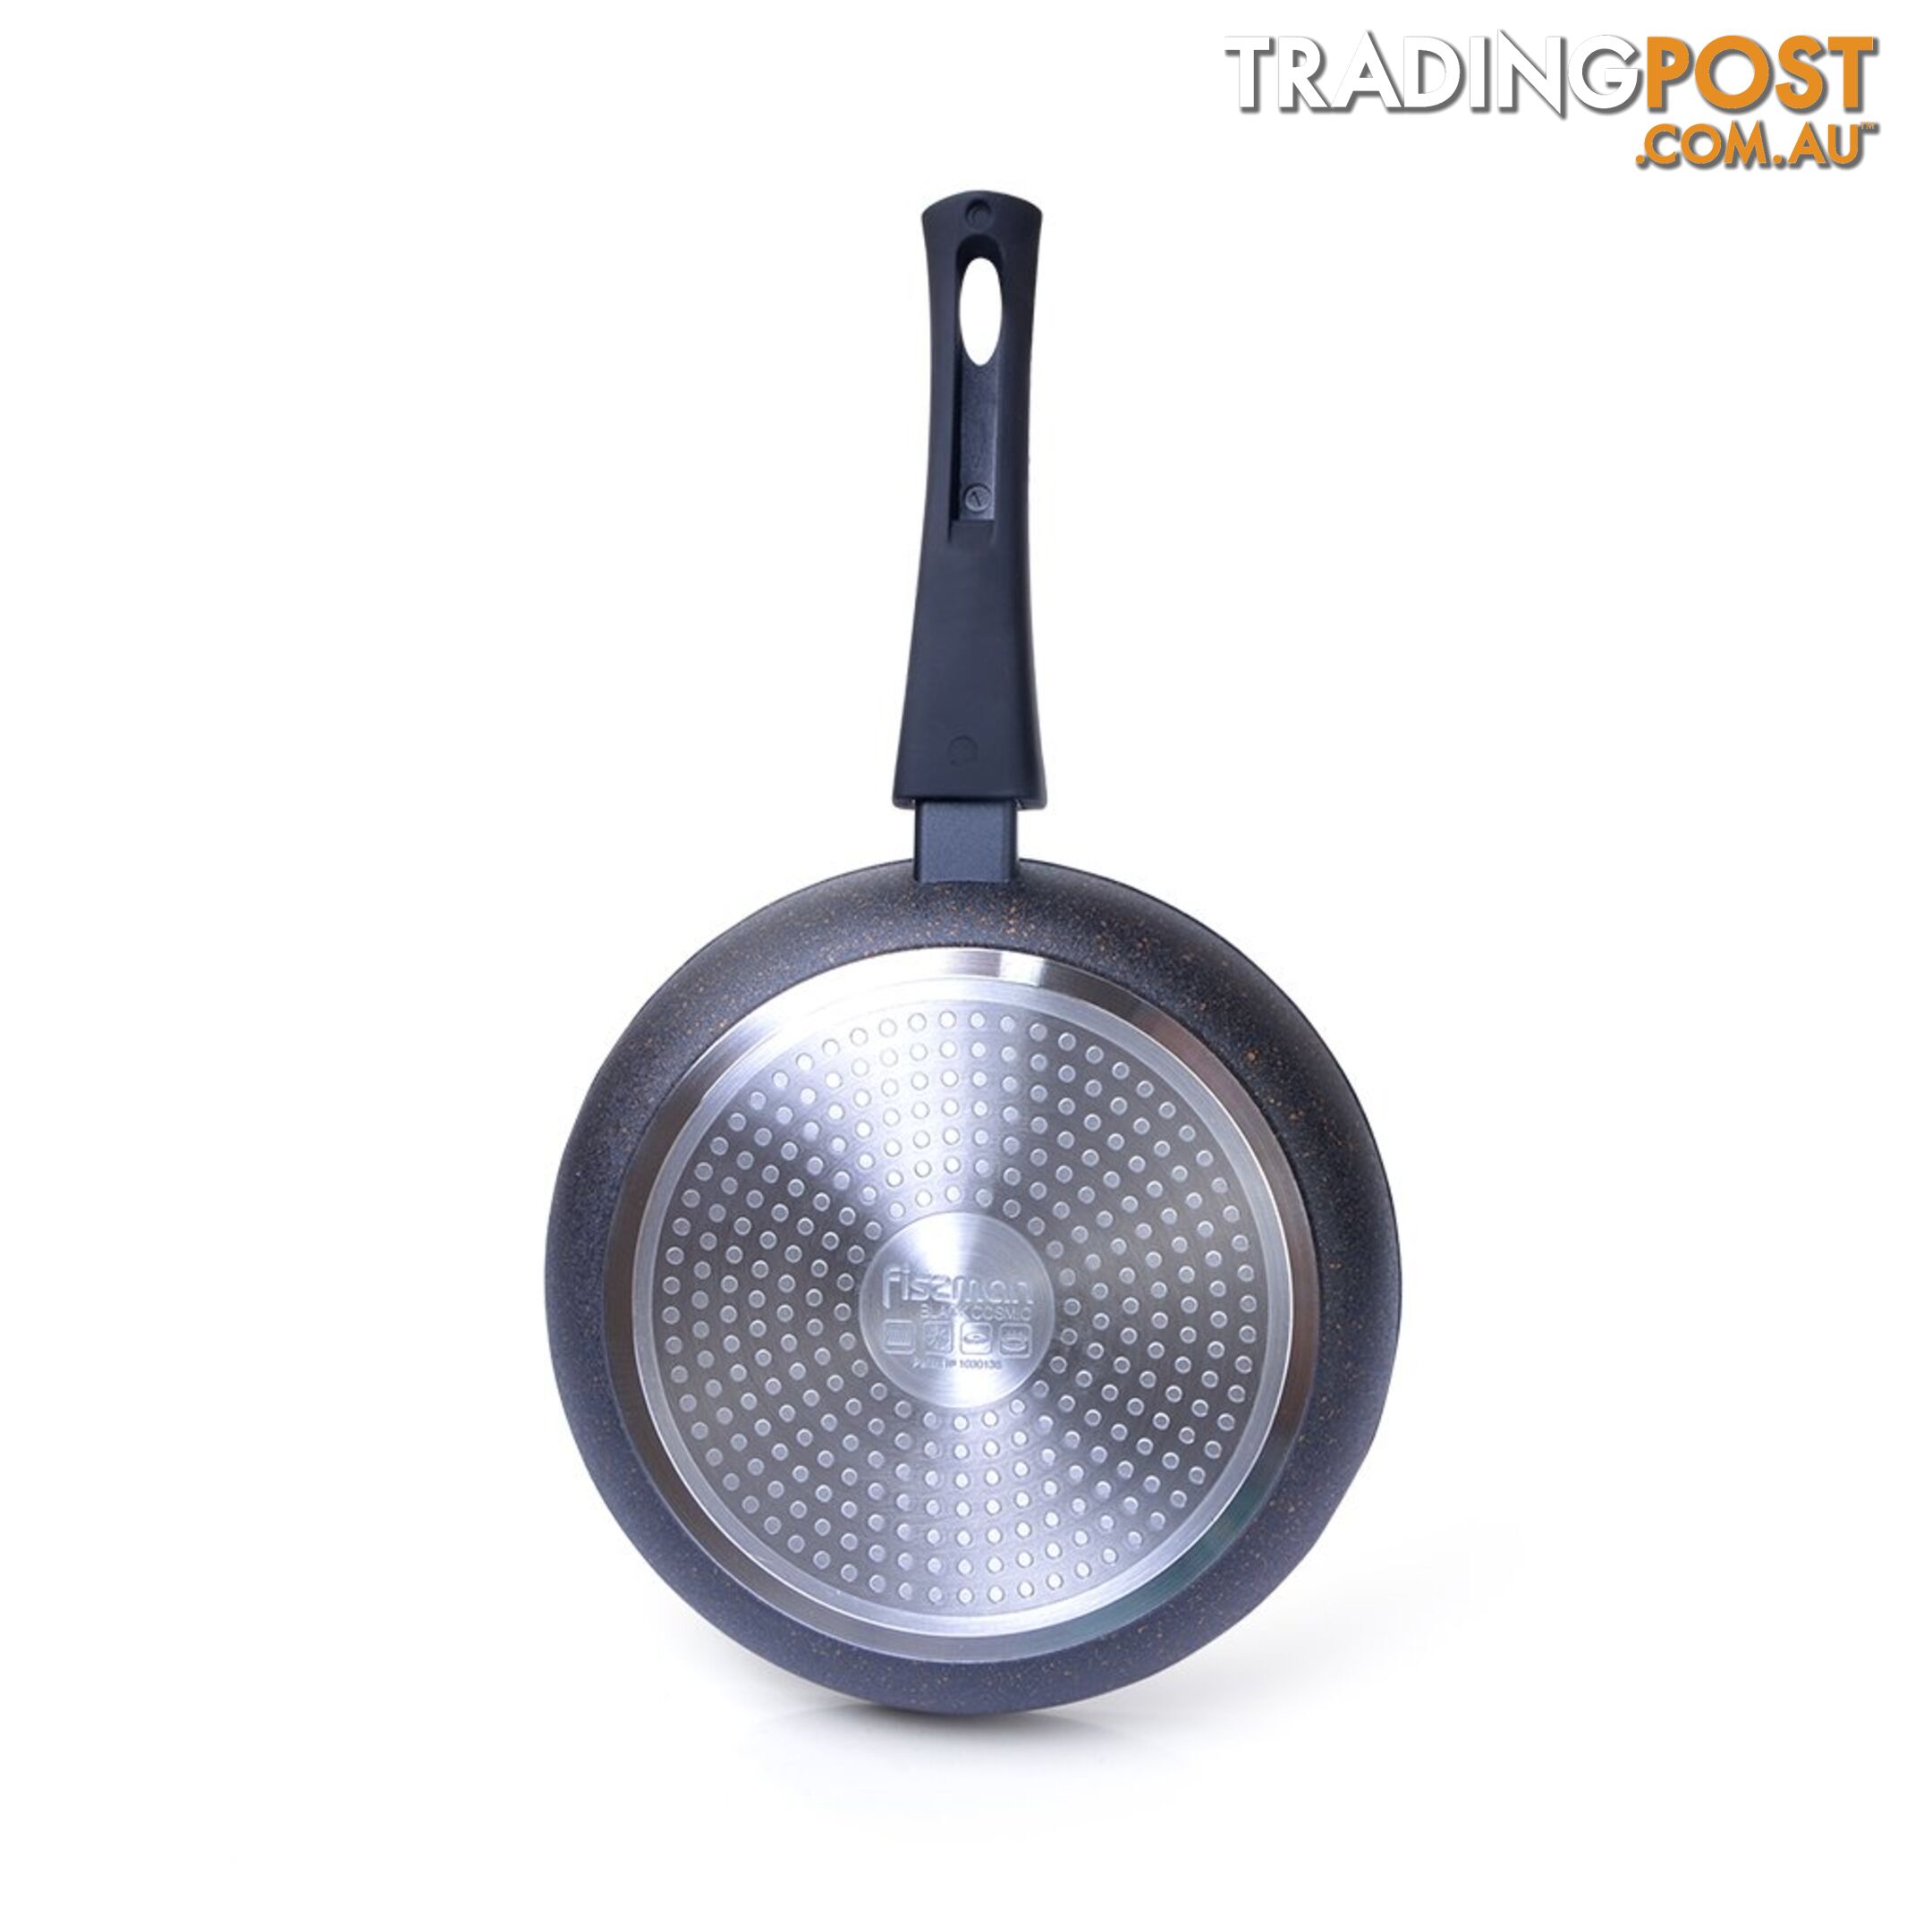 FISSMAN Frying pan with detachable handle BLACK COSMIC - 24x4.9 cm - 4367